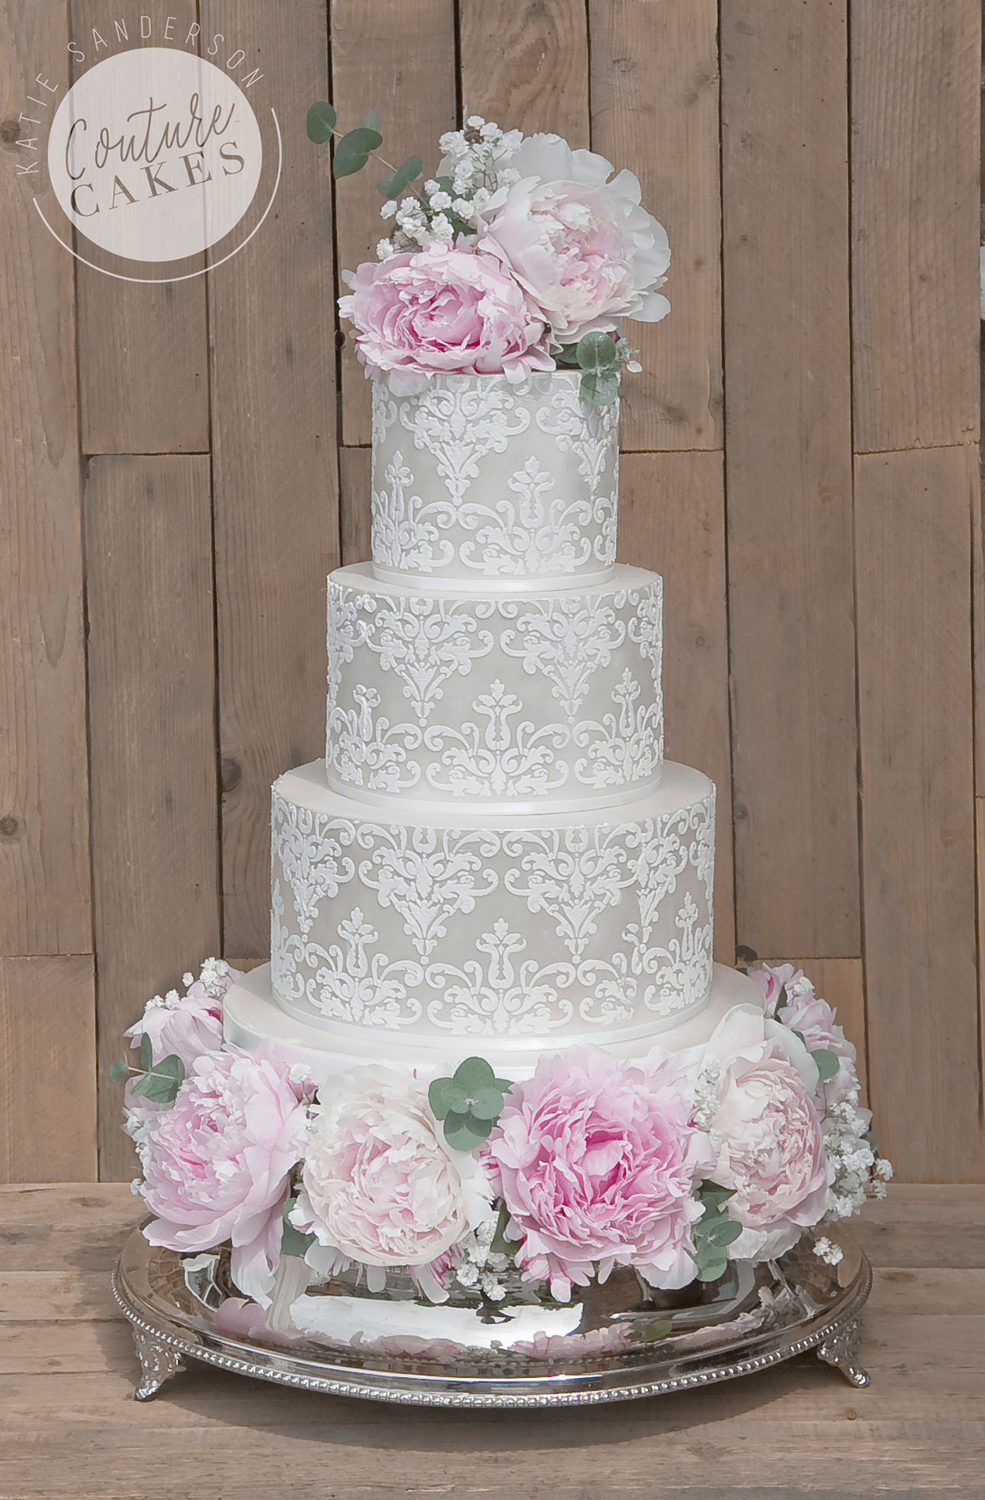 Damask Shimmer Wedding Cake: Serves 80 portions, Price category C, £520 excluding flowers